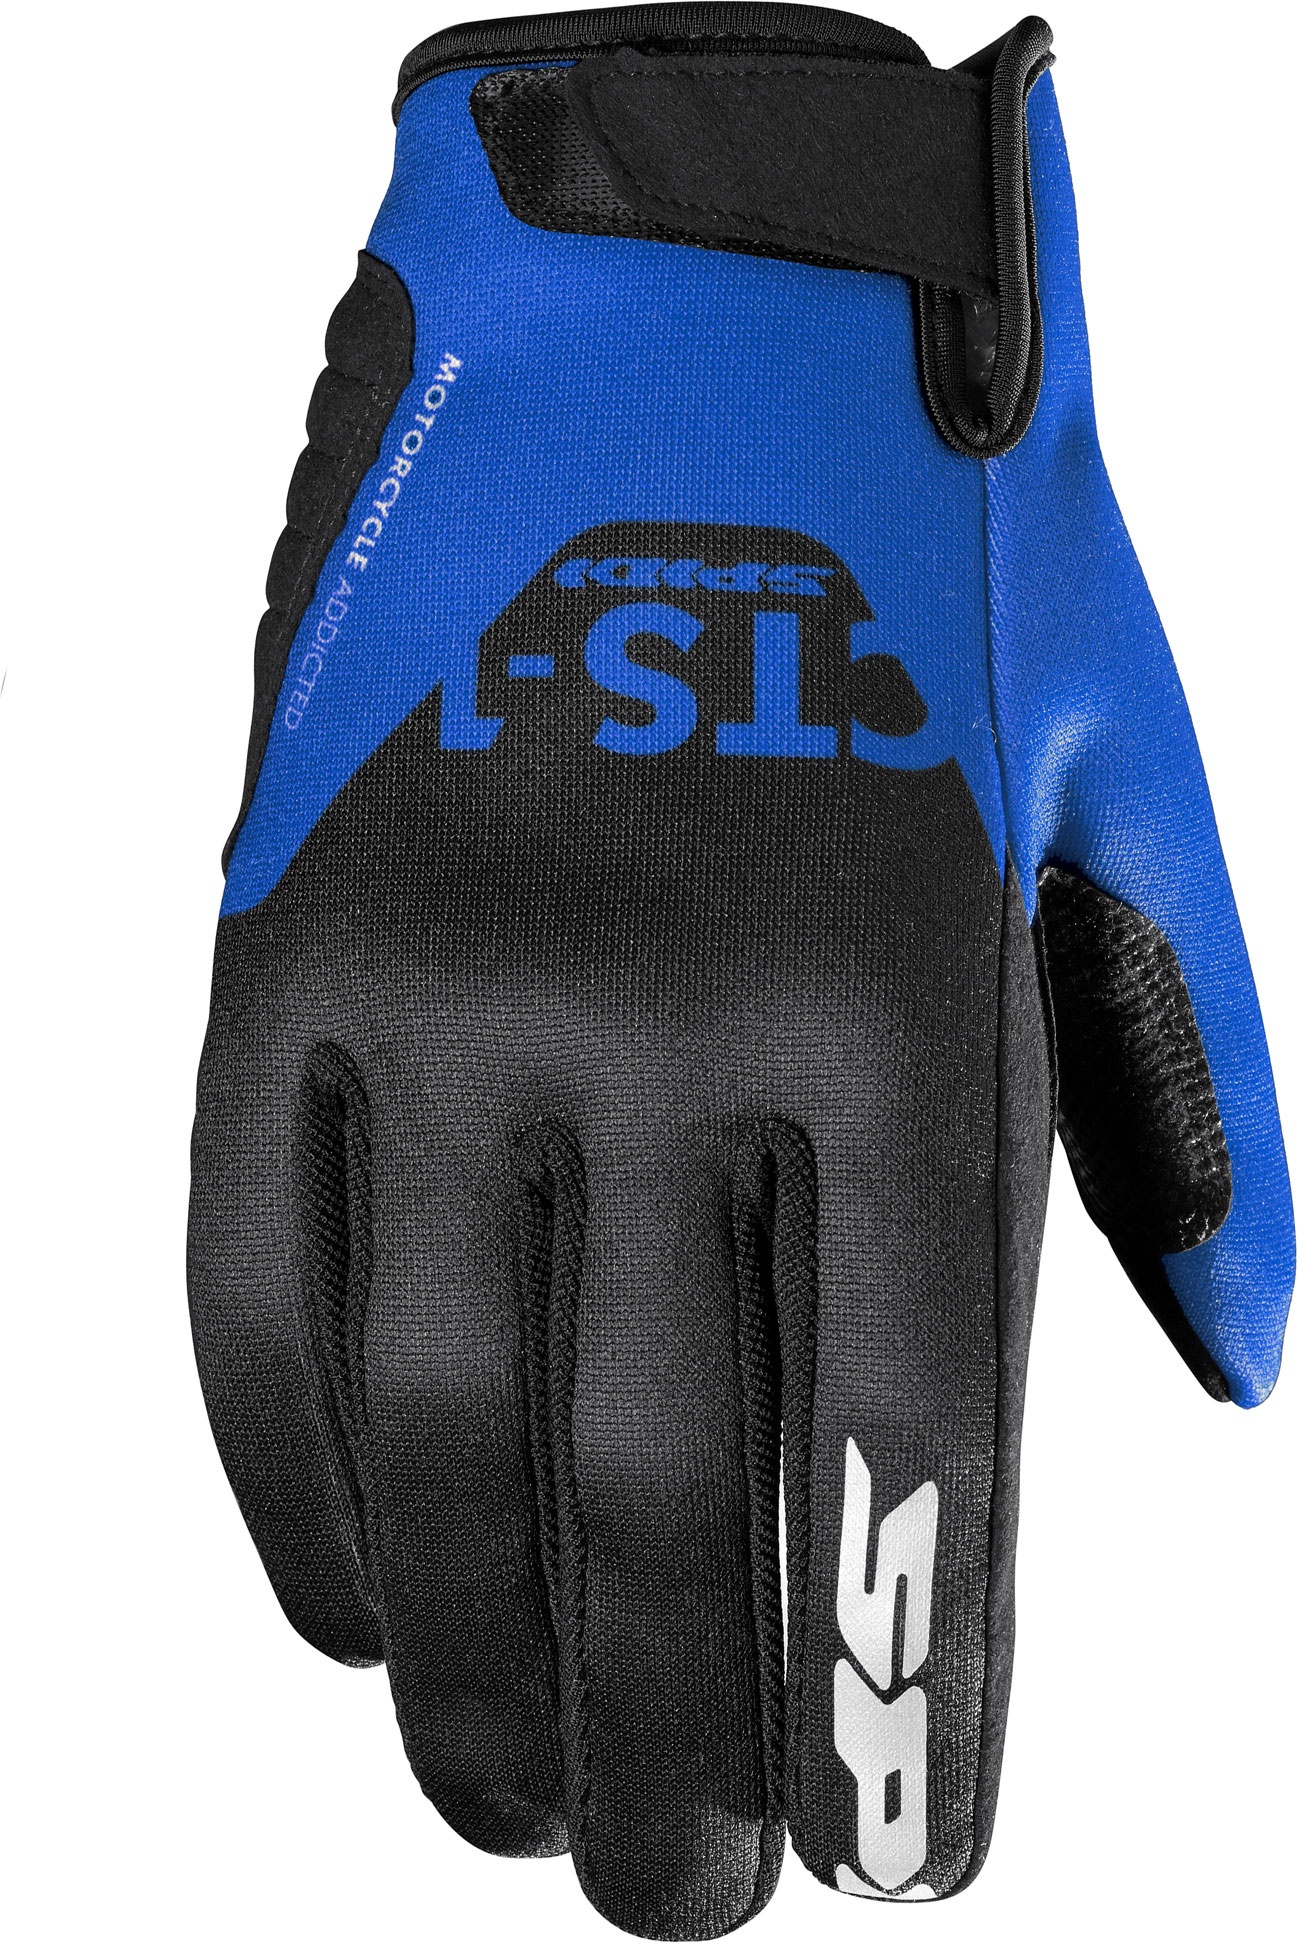 Spidi CTS-1, gants - Noir/Bleu - L